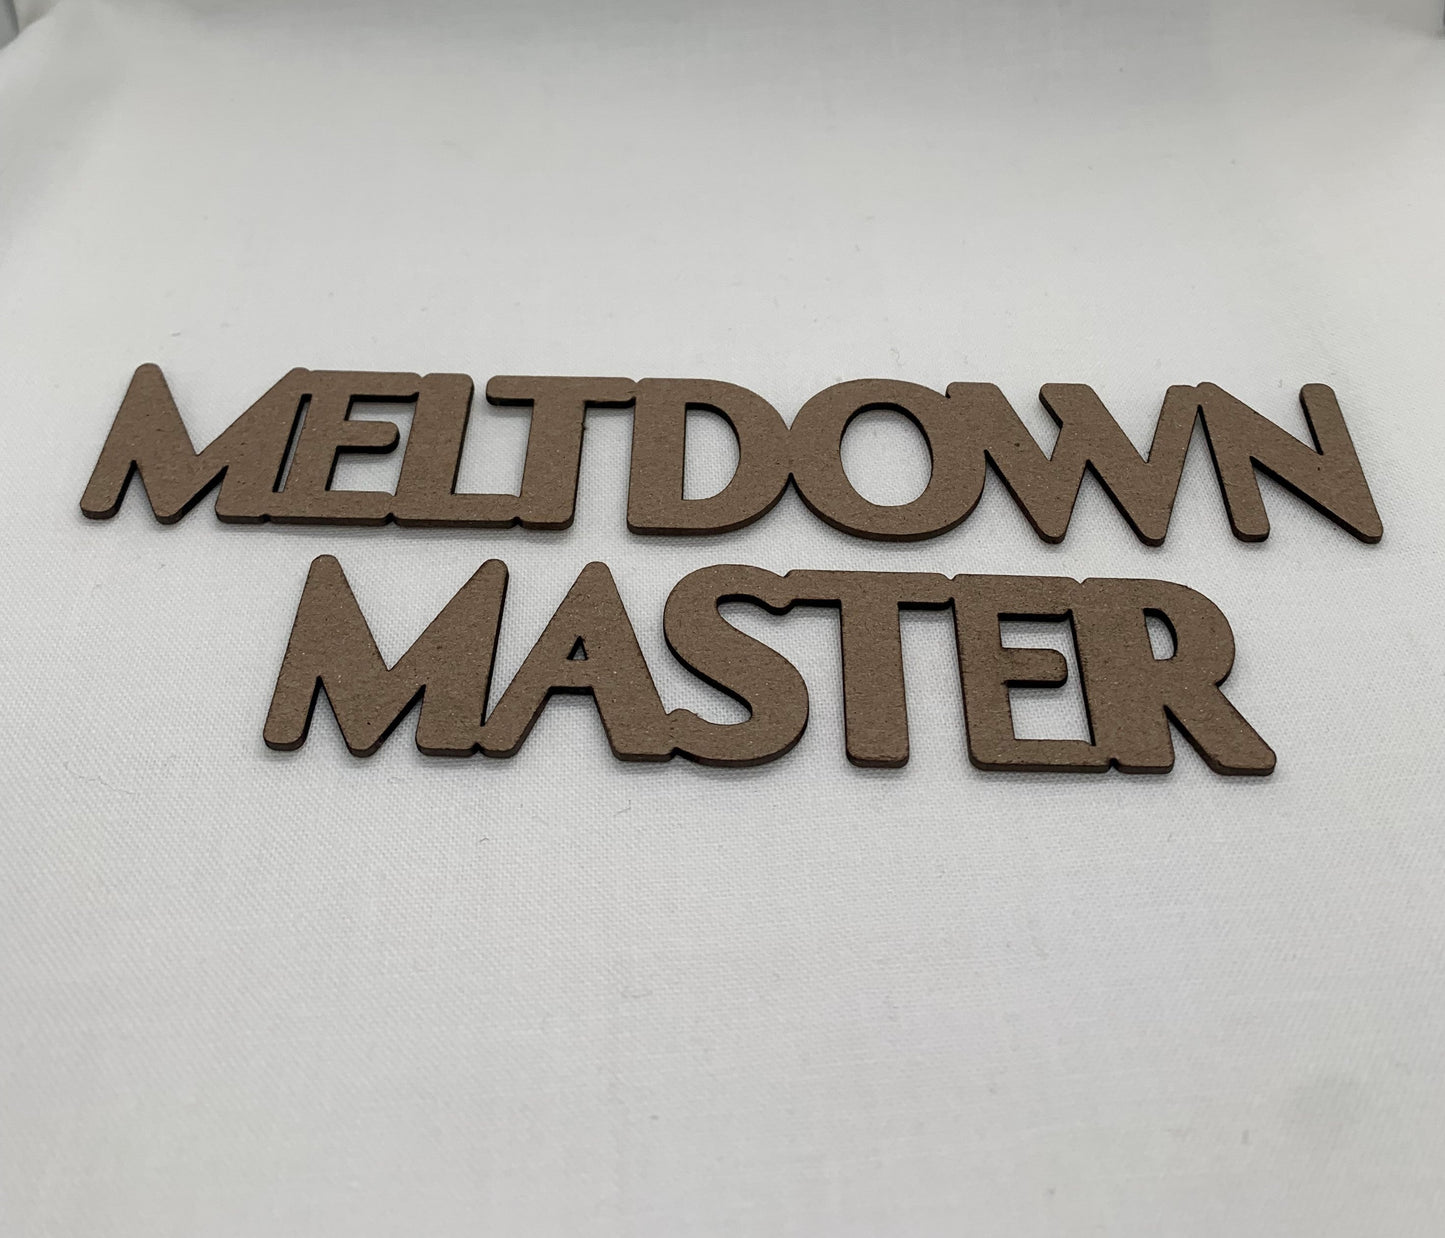 Meltdown master - Creative Designs By Kari